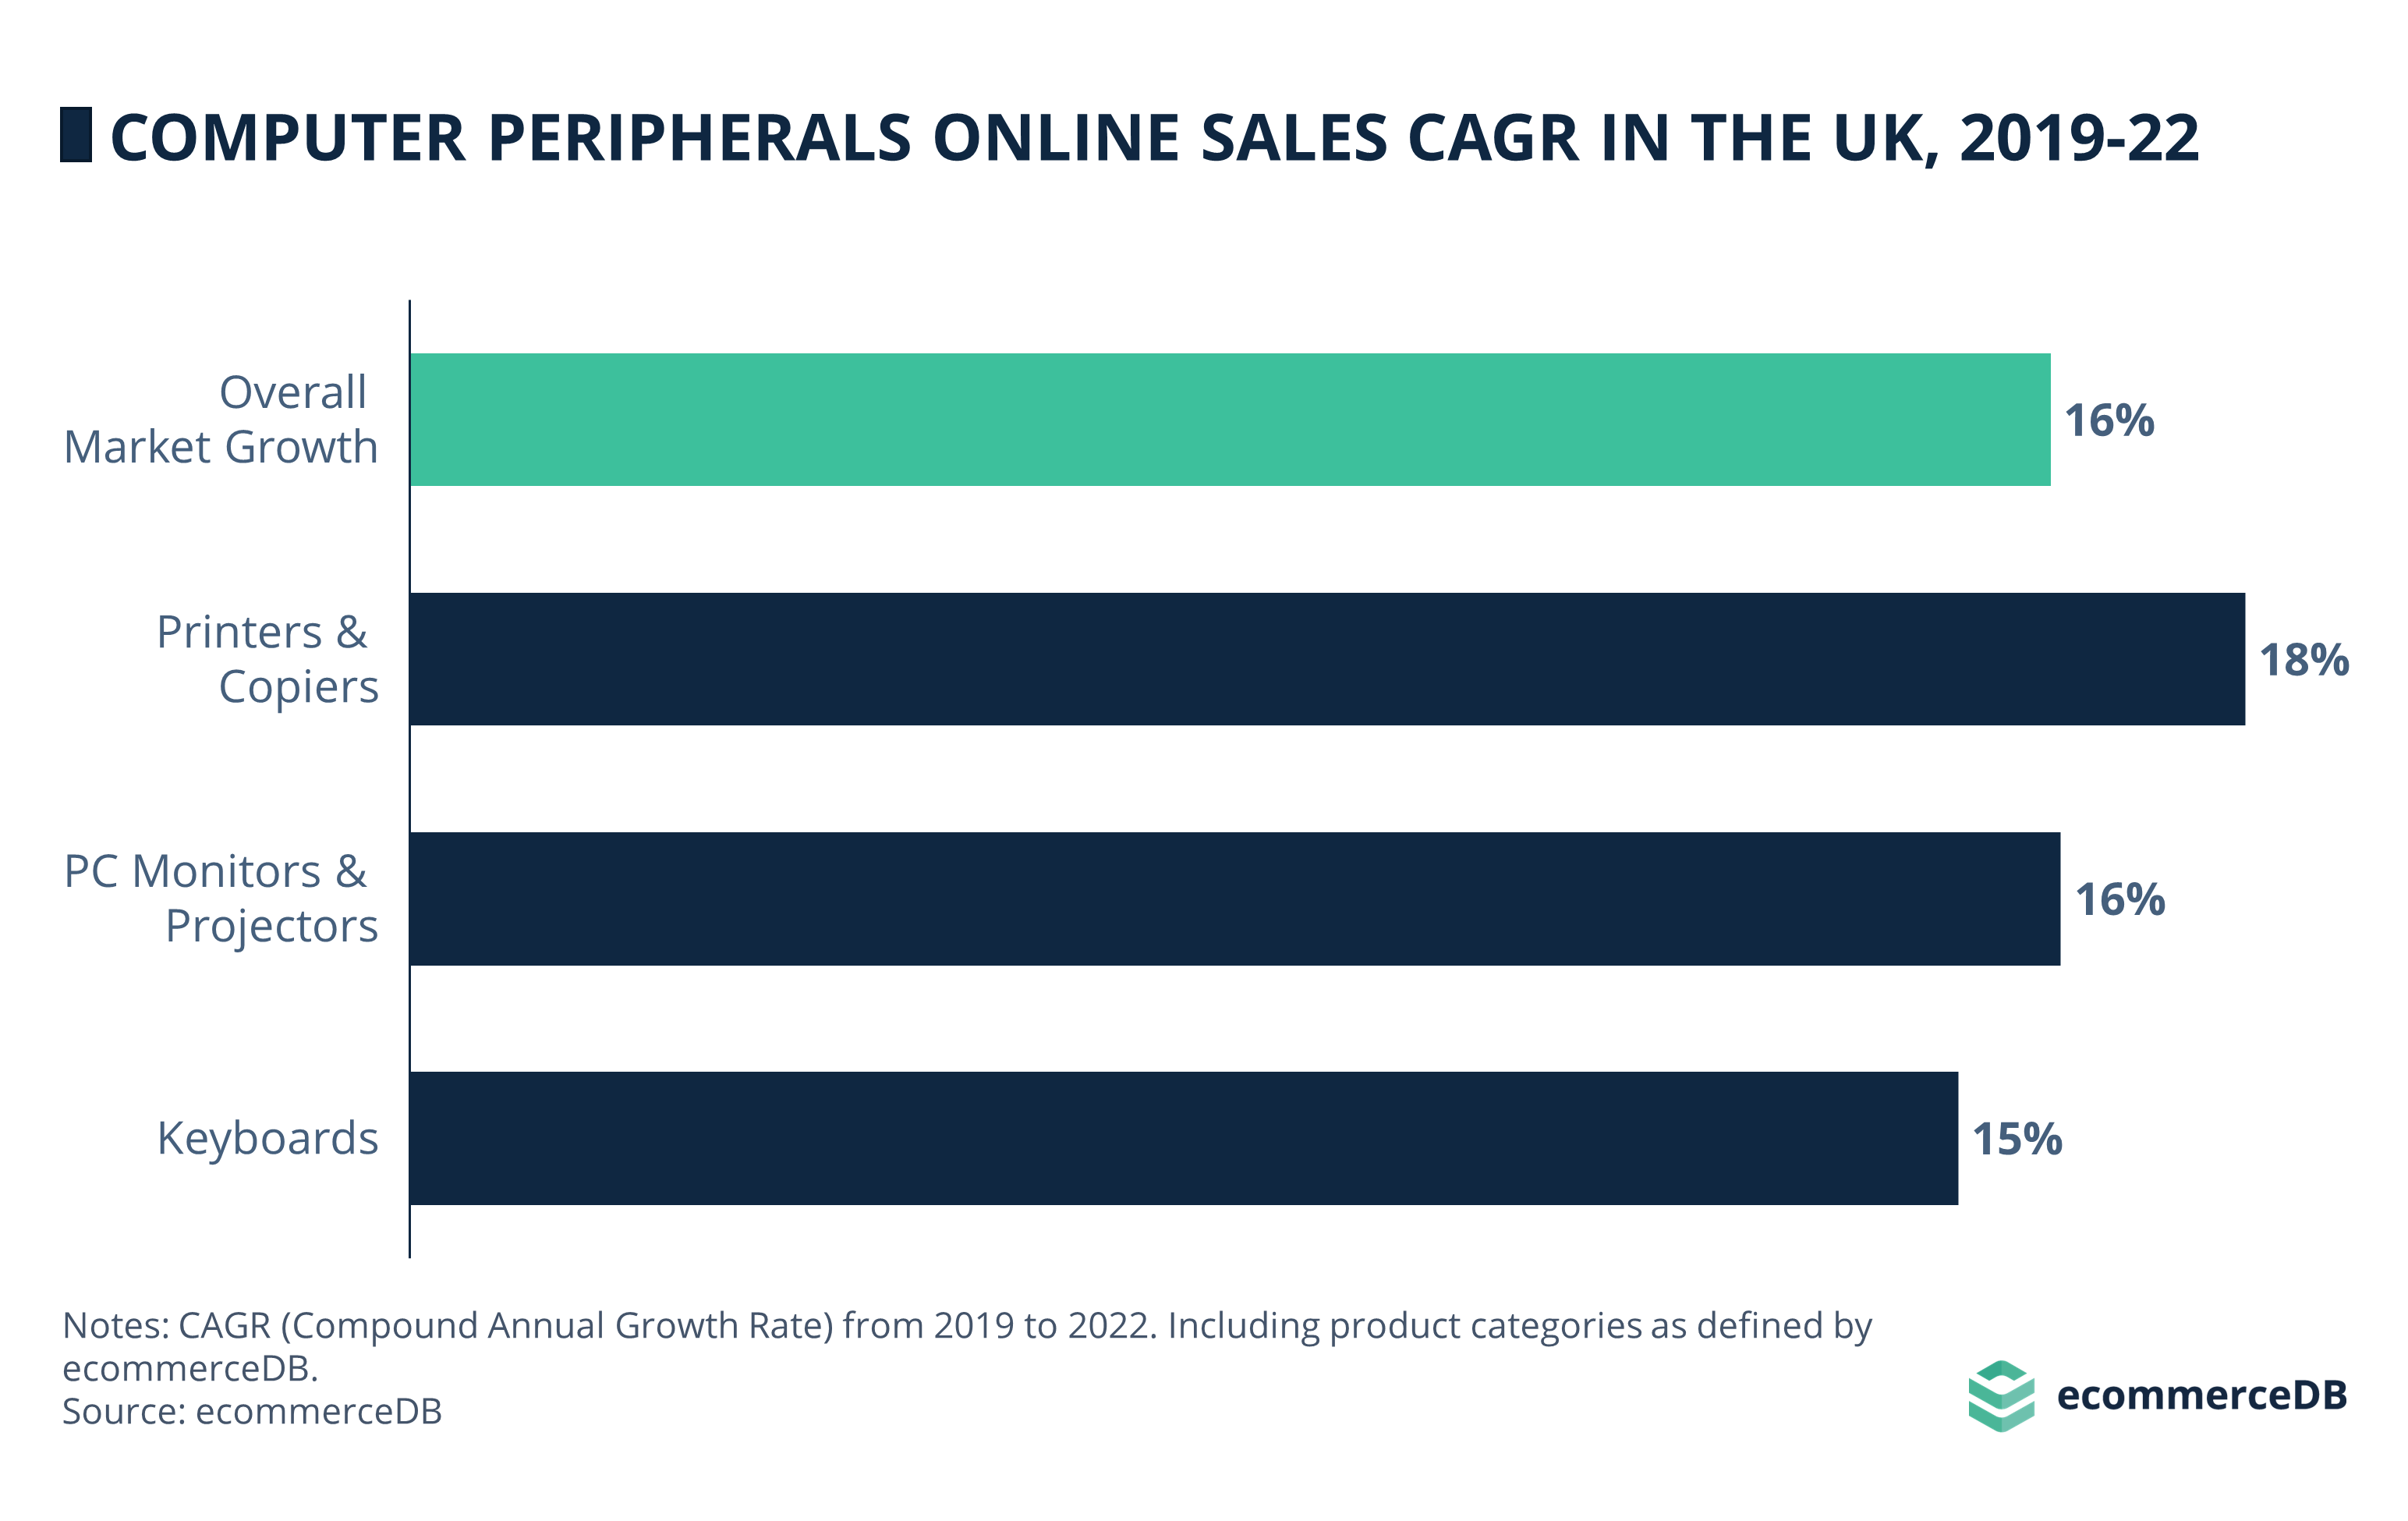 UK Computer Peripherals Online Sales CAGR (2019-22)